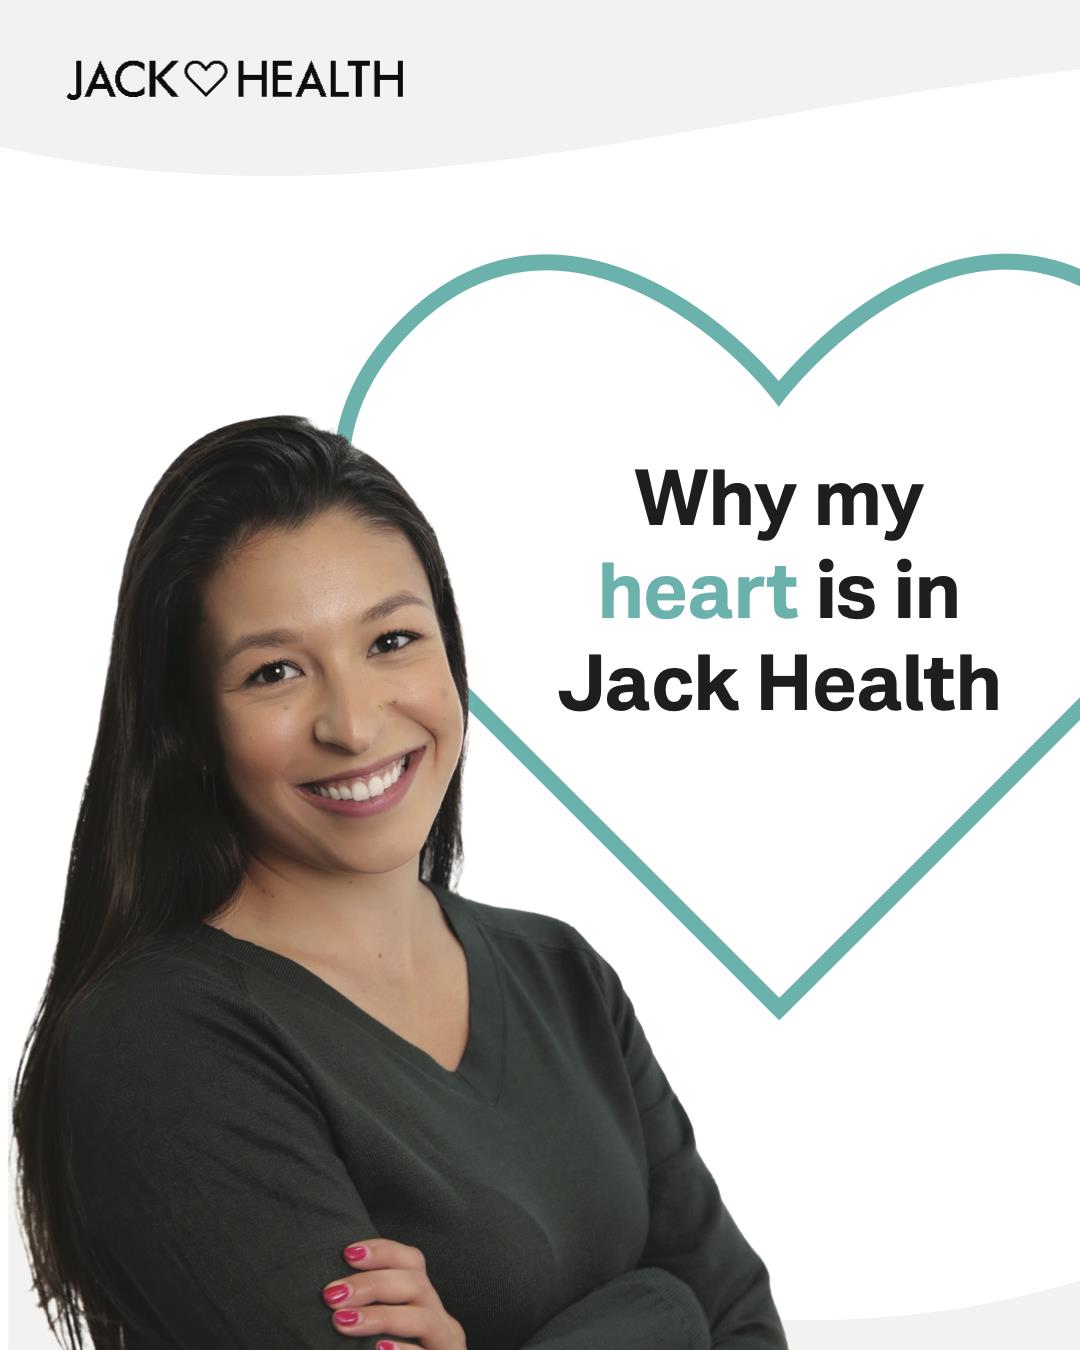 Jack Morton Worldwide on LinkedIn: Why My Heart is in Jack Health - Amy Gattoni - Scoliosis